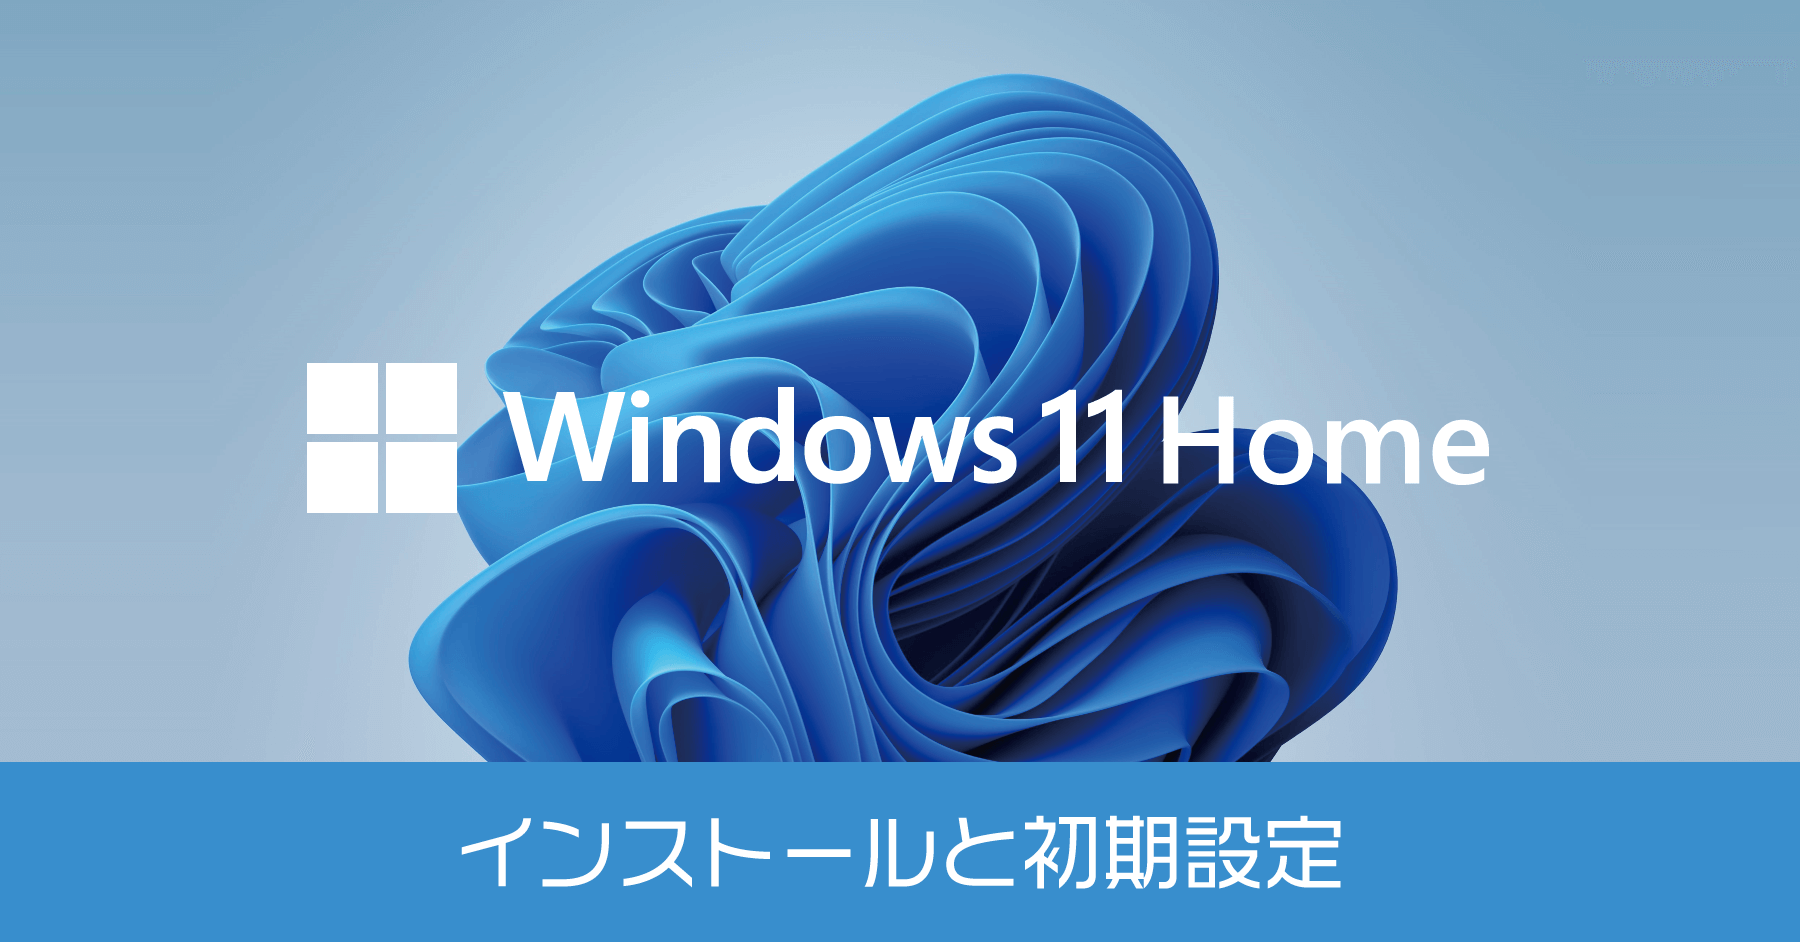 Windows 11 Home のインストールと初期設定の方法